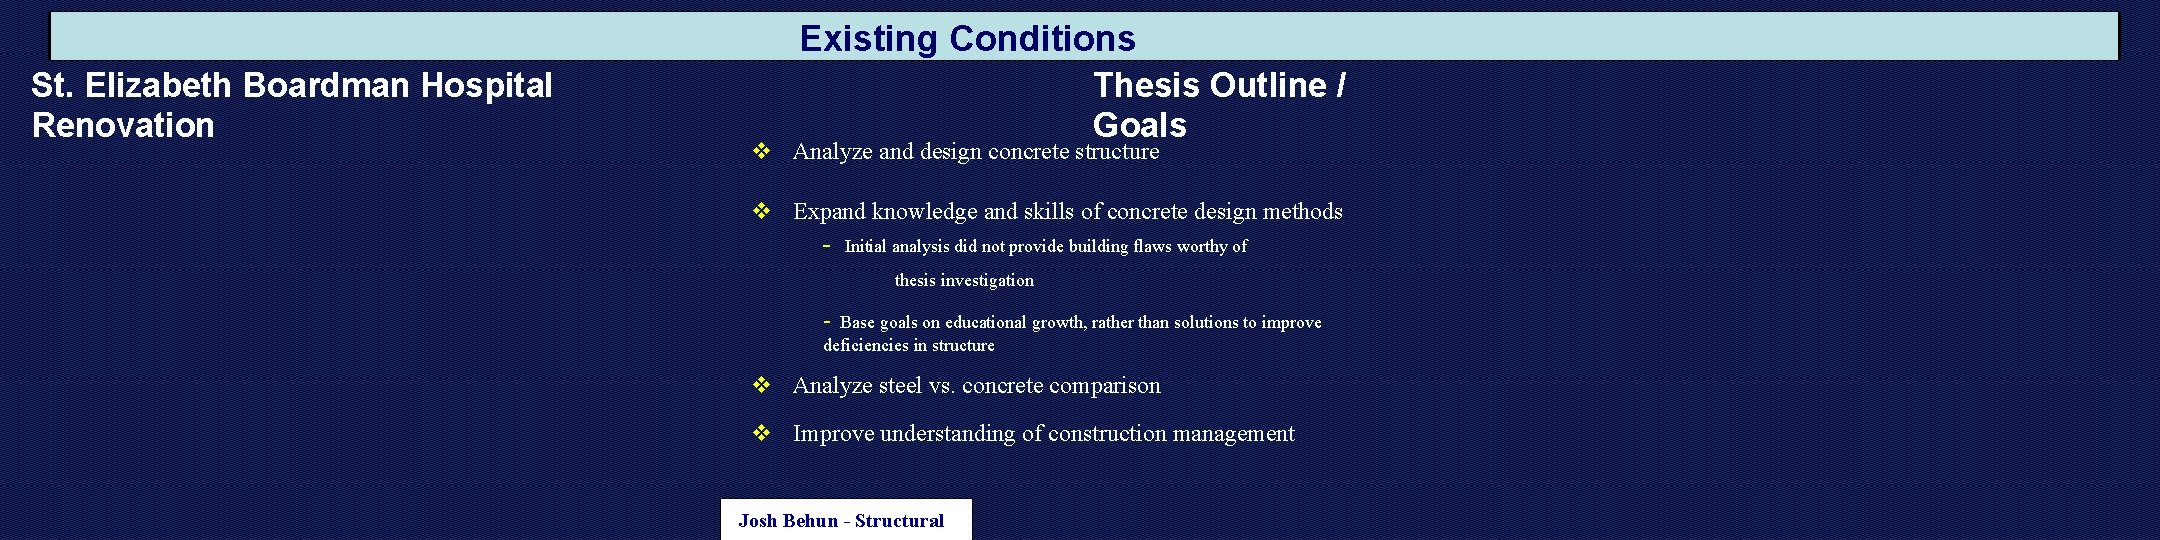 Existing Conditions St. Elizabeth Boardman Hospital Renovation Thesis Outline / Goals v Analyze and